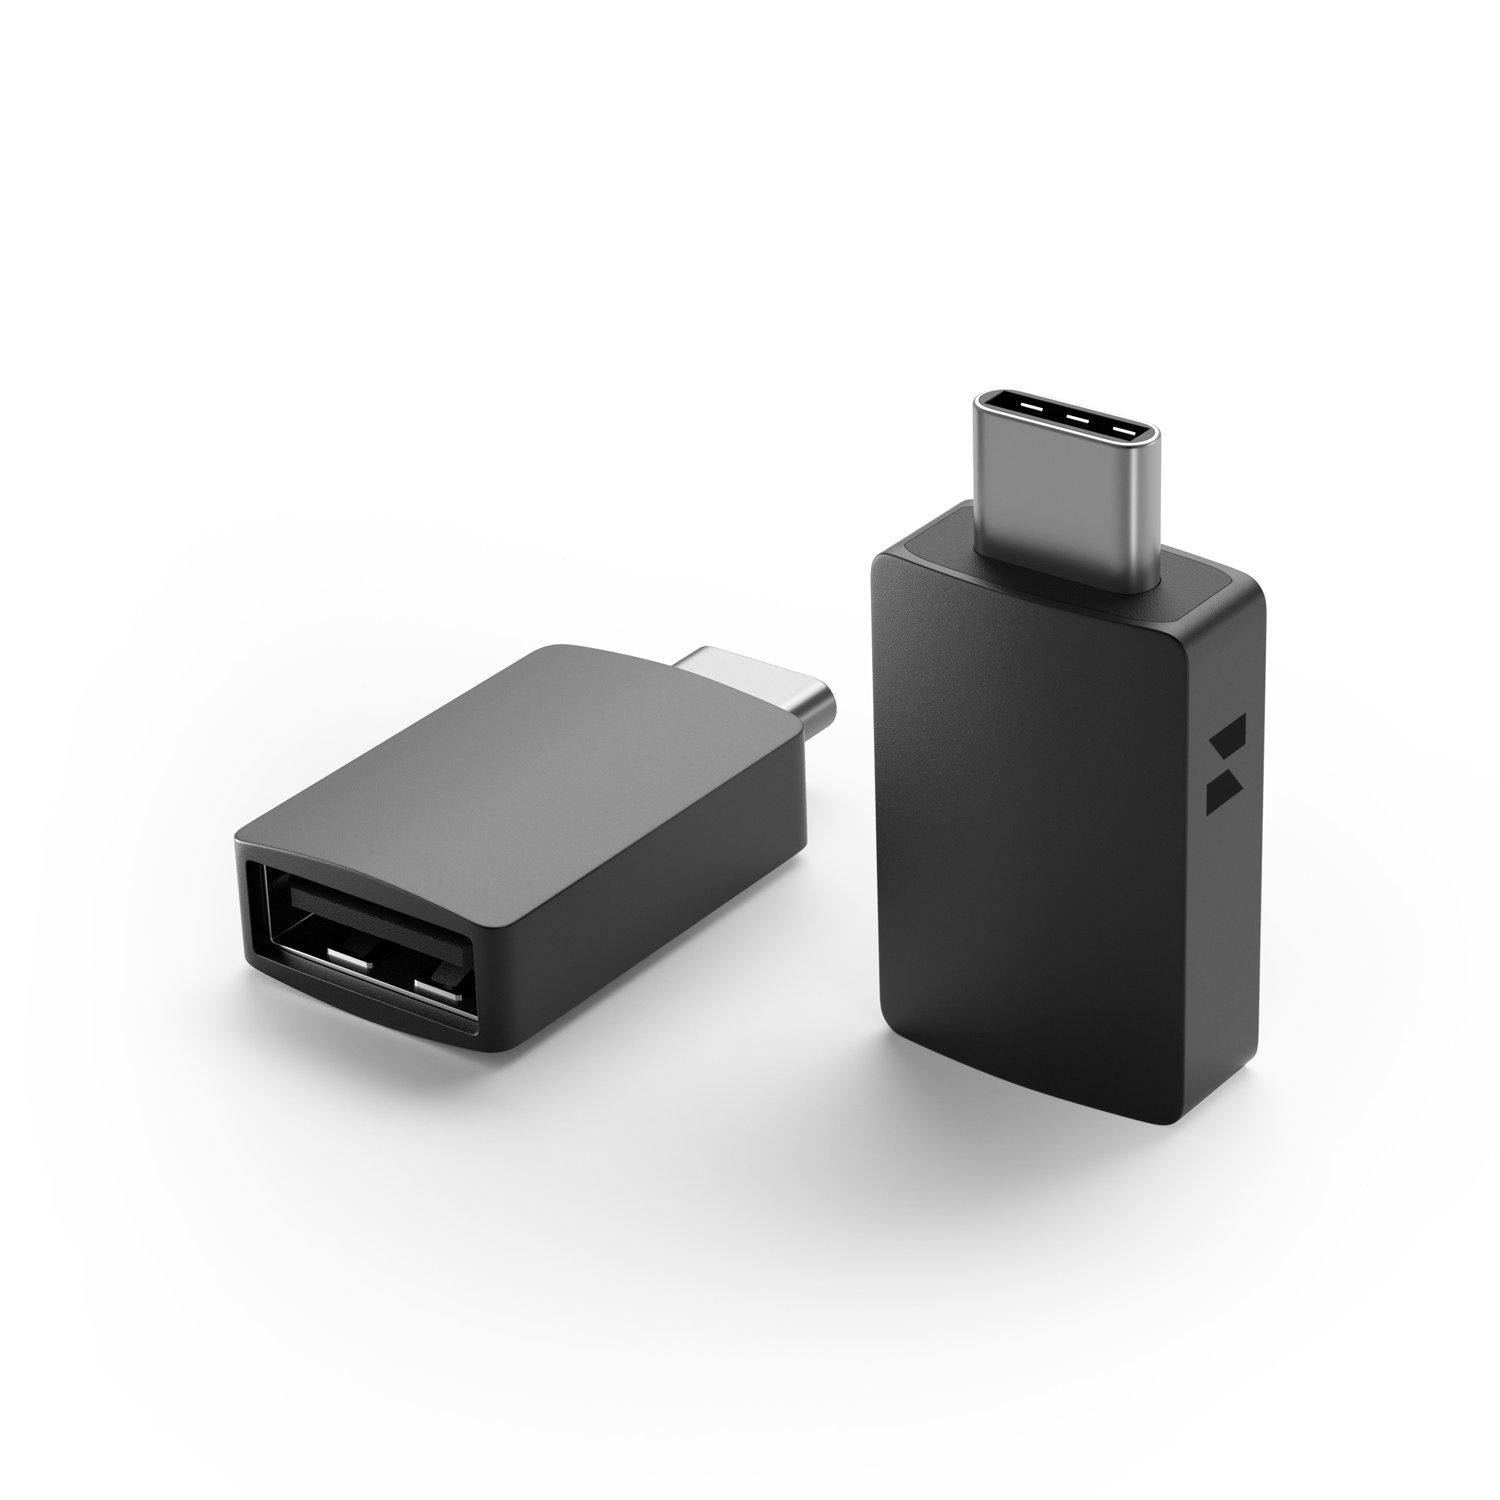 USB C to USB Adapter, Type C Adaptor, USB C Dongle | Aluminum